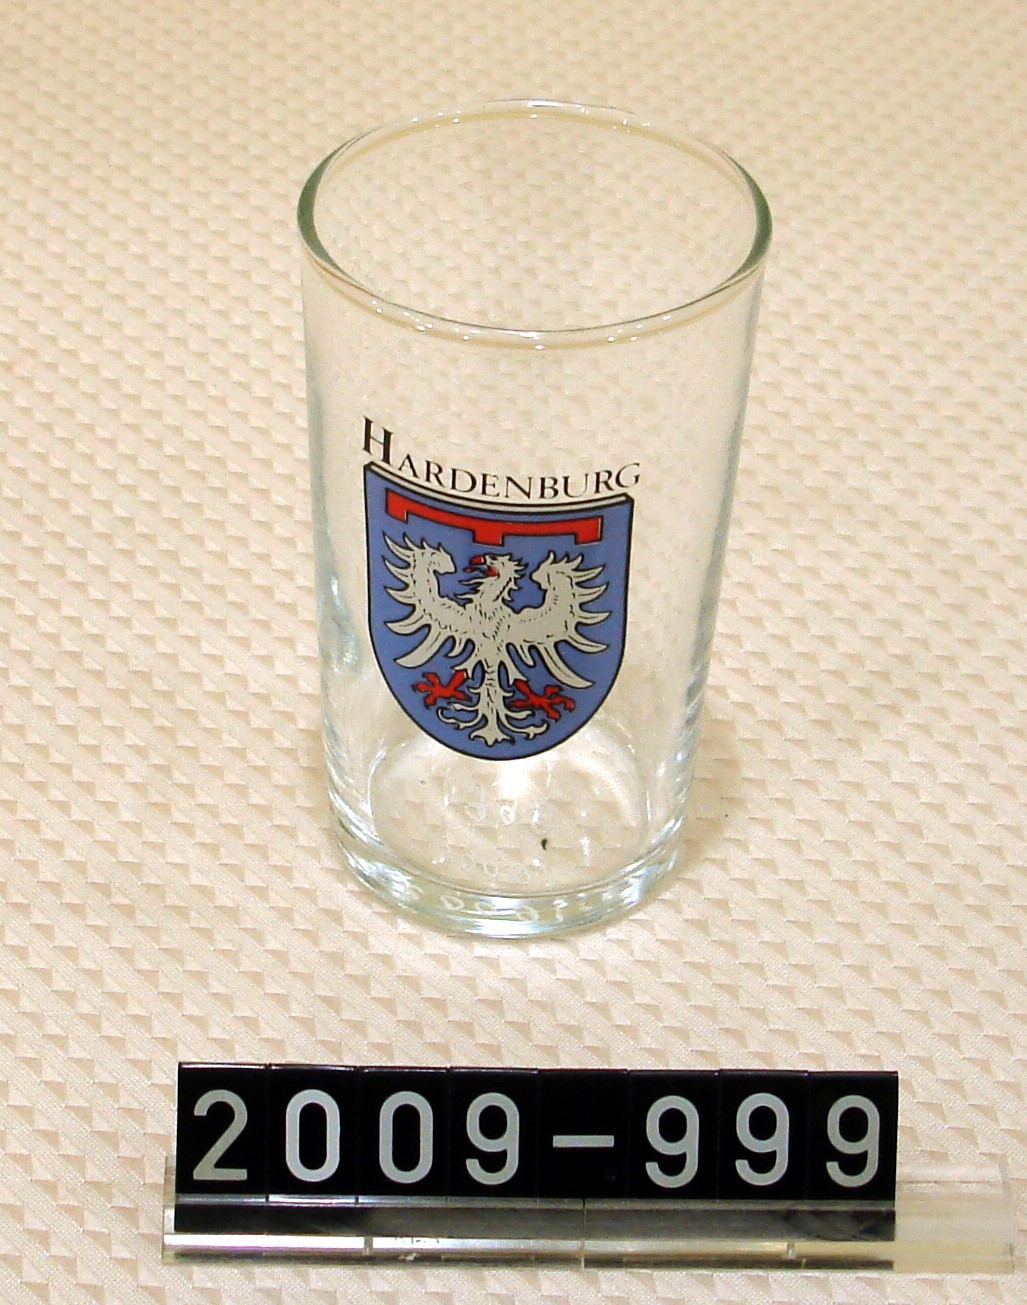 Probierglas; Souvenirglas: "Hardenburg", Bad Dürkheim, 20. Jh. (Stadtmuseum Bad Dürkheim, Museumsgesellschaft Bad Dürkheim e.V. CC BY-NC-SA)